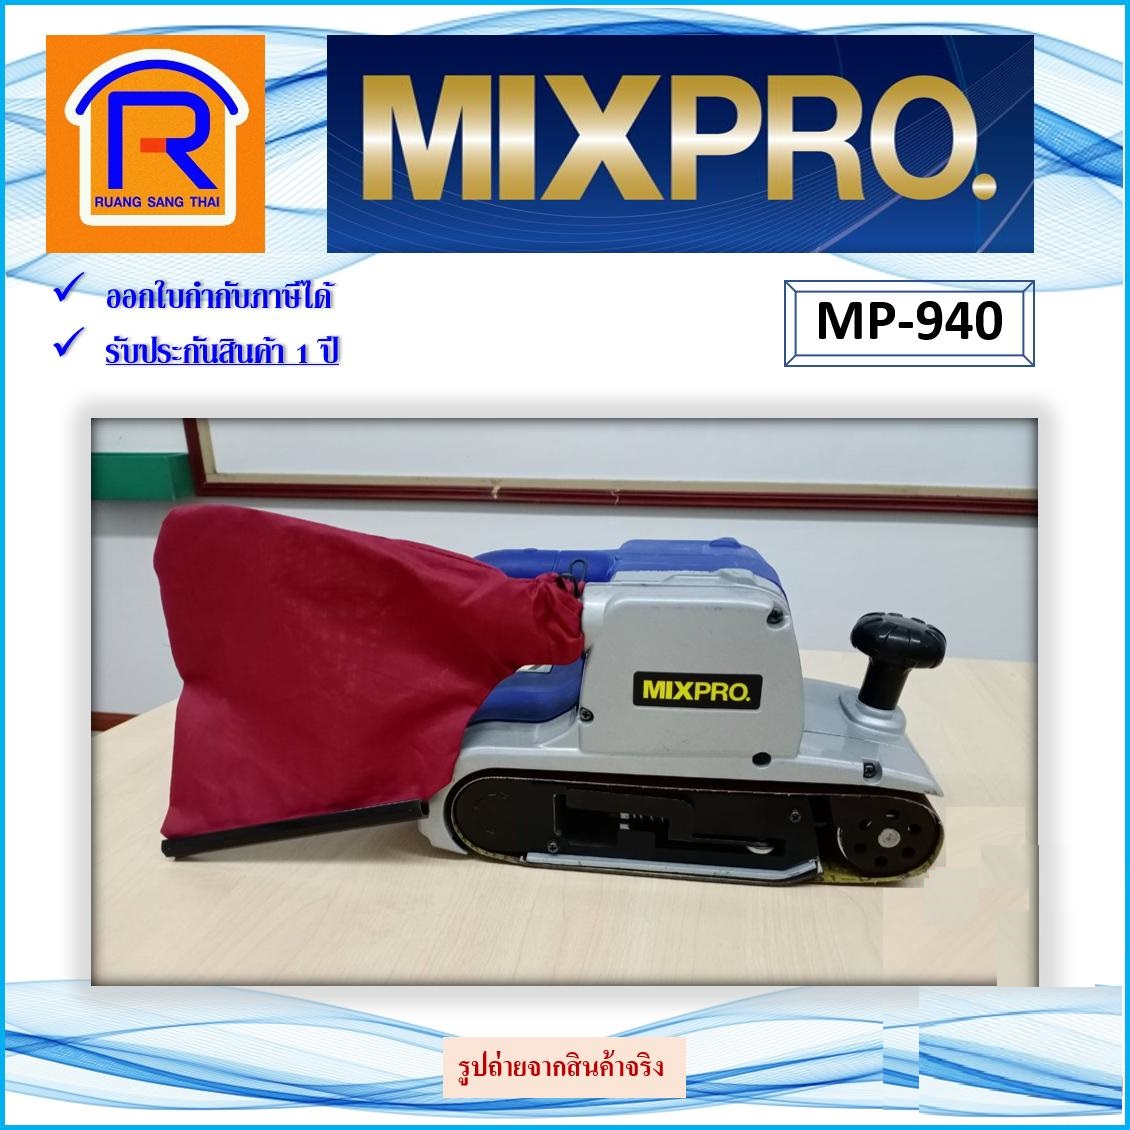 MIXPRO MP-940